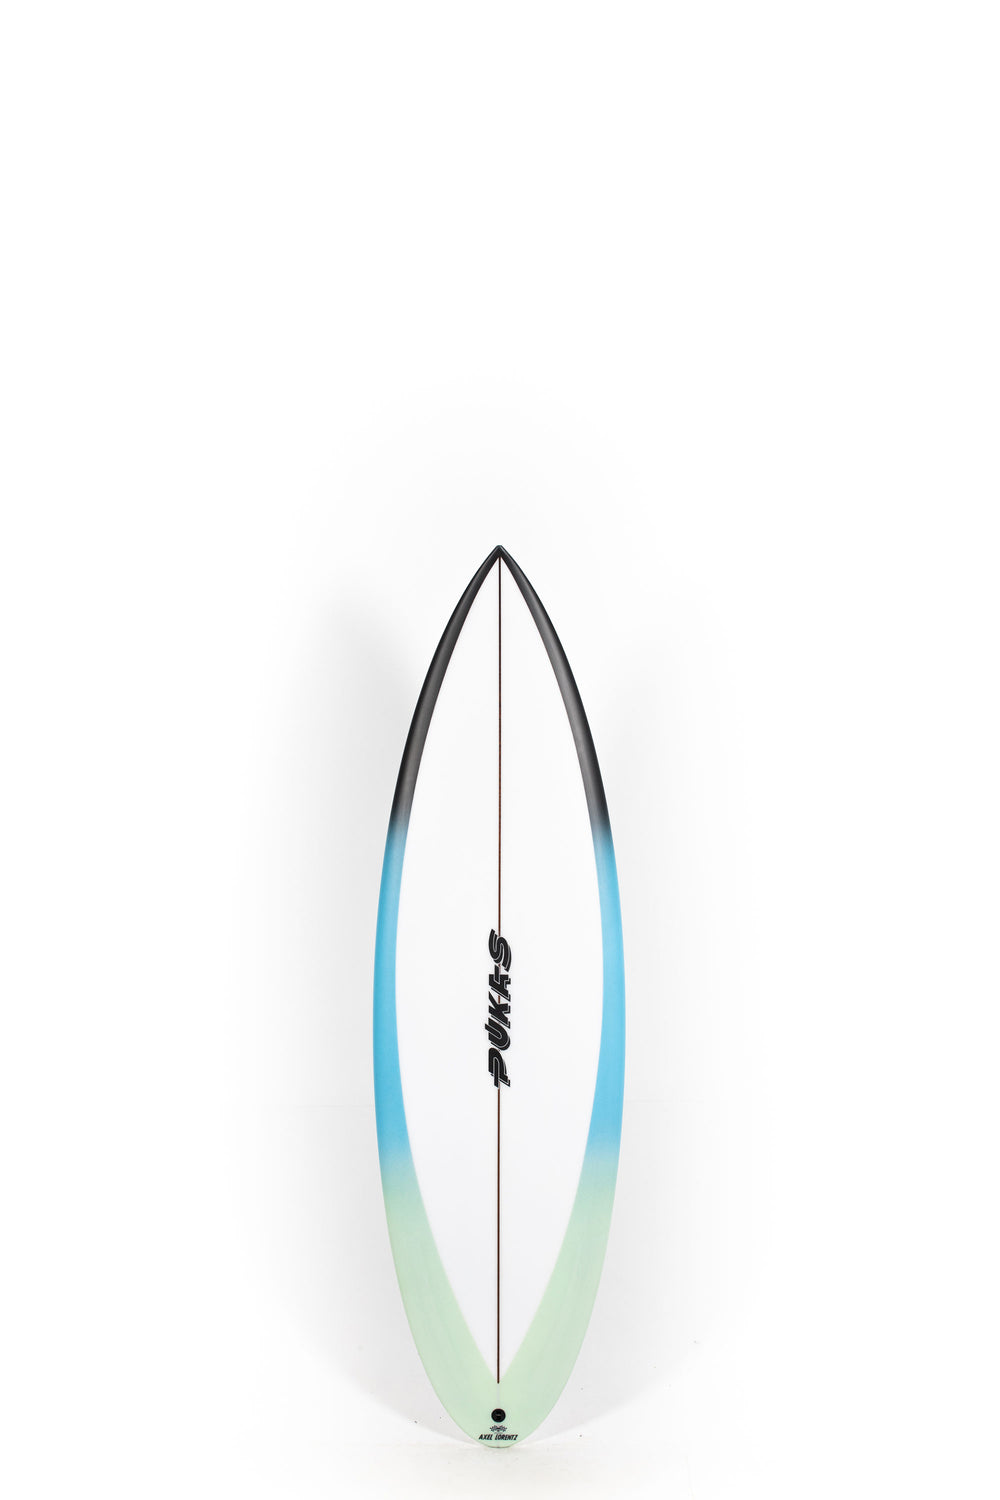 Pukas Surf Shop - Pukas Surfboard - TASTY TREAT ALL ROUND by Axel Lorentz - 5'7